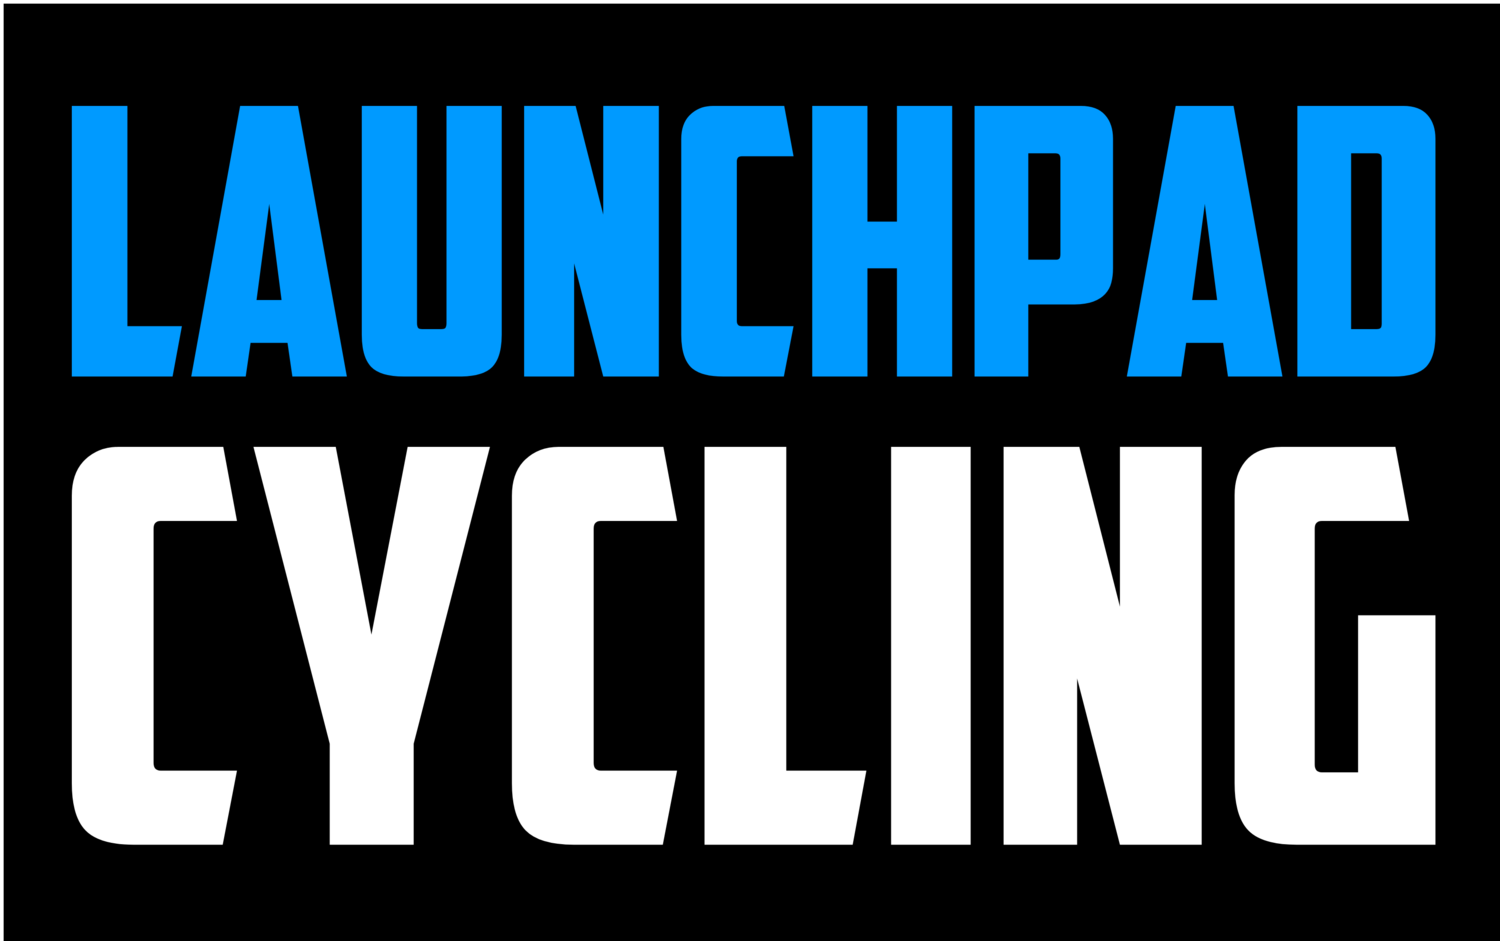 LaunchPad Cycling